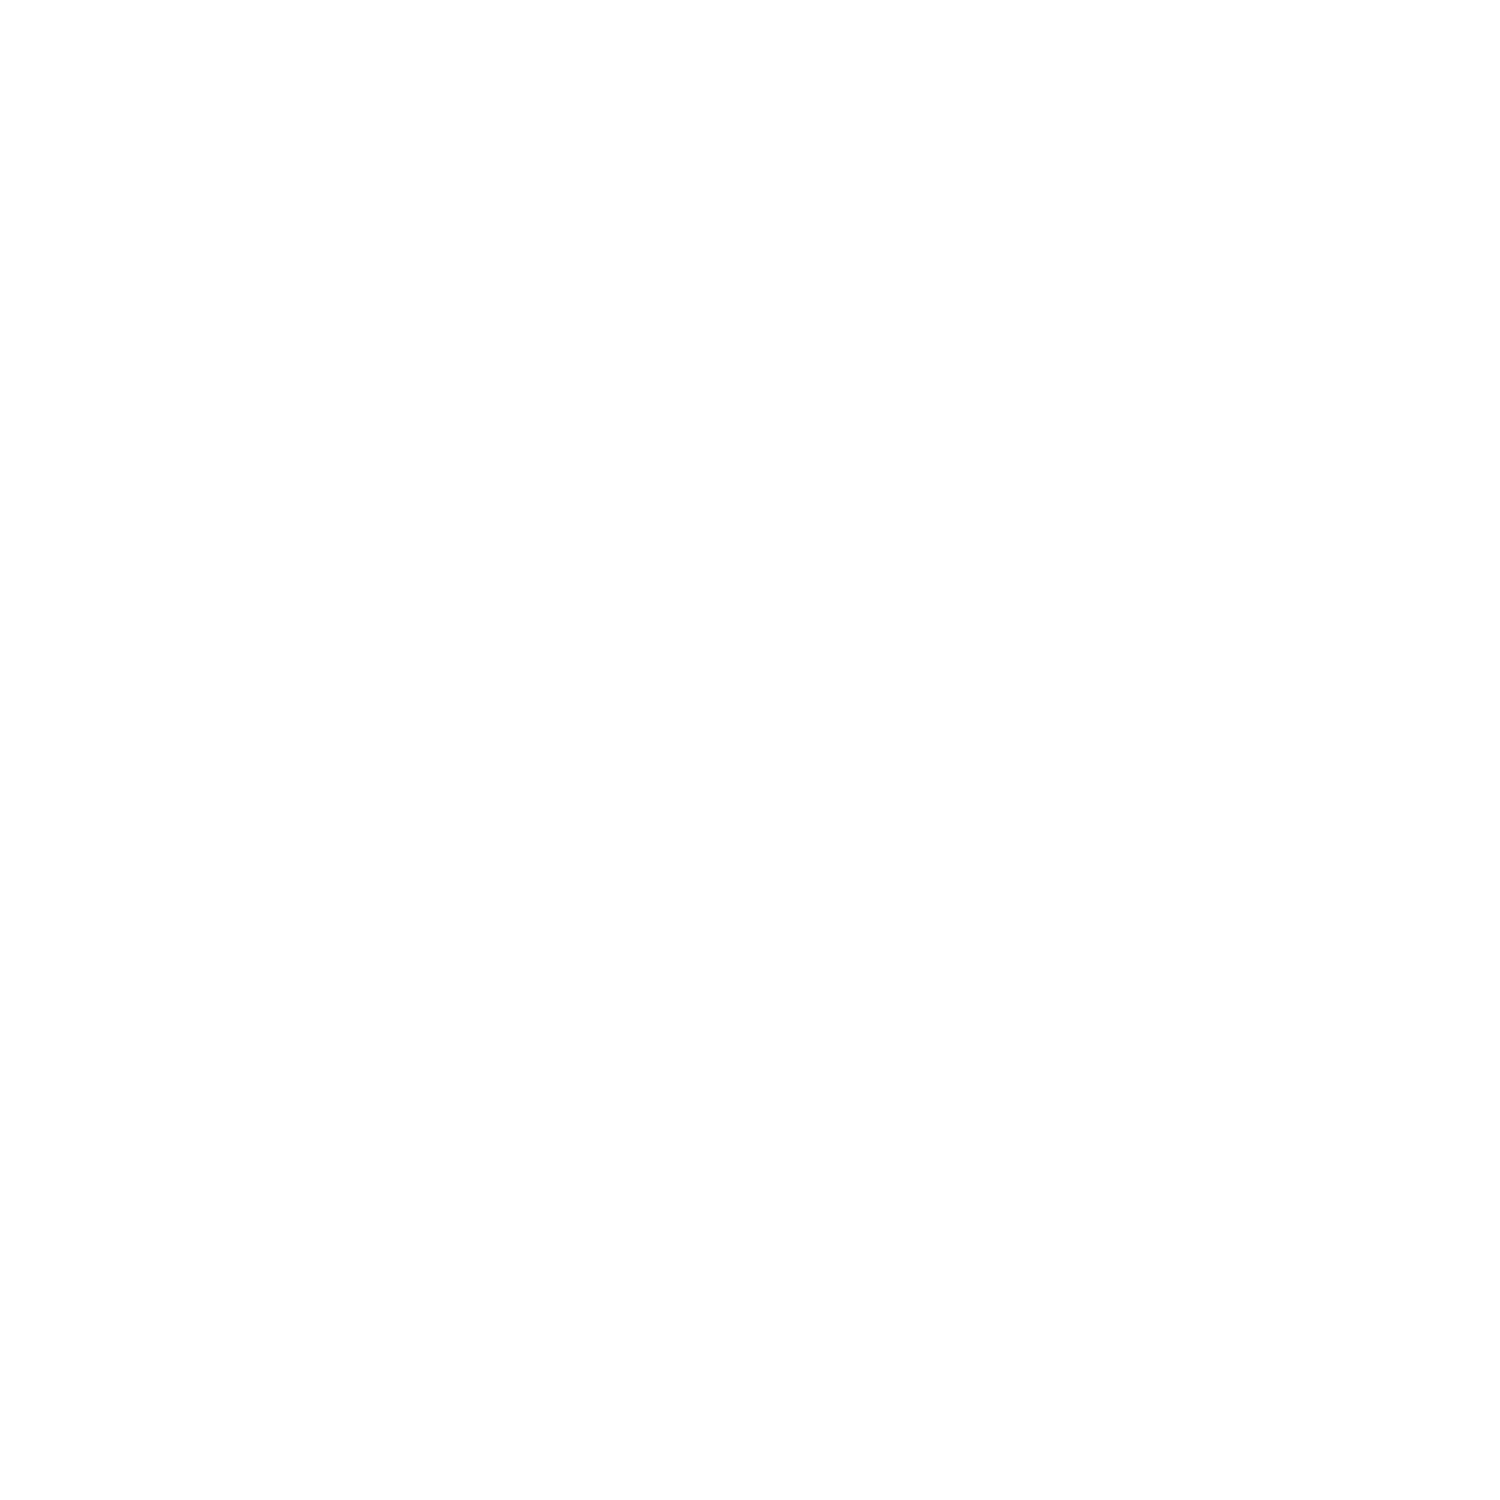 The Nairobi Musical Theatre Initiative